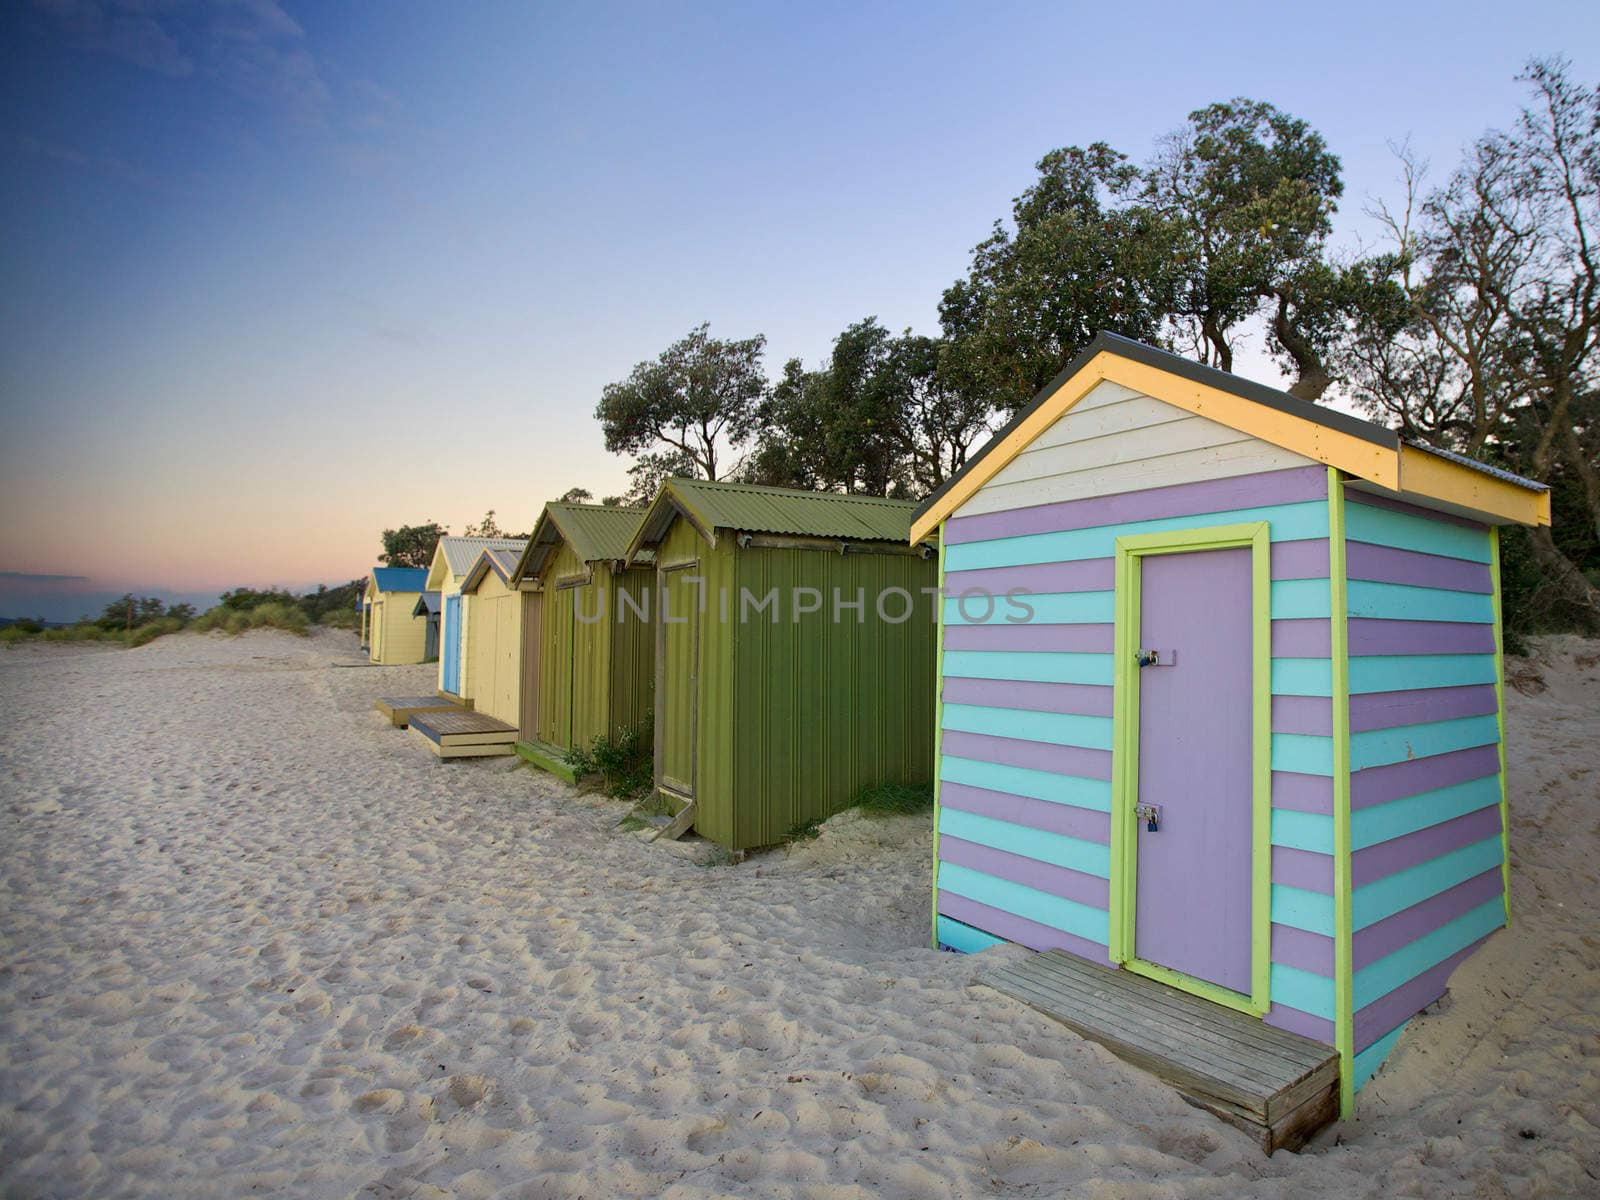 Colourful beach huts in Australia